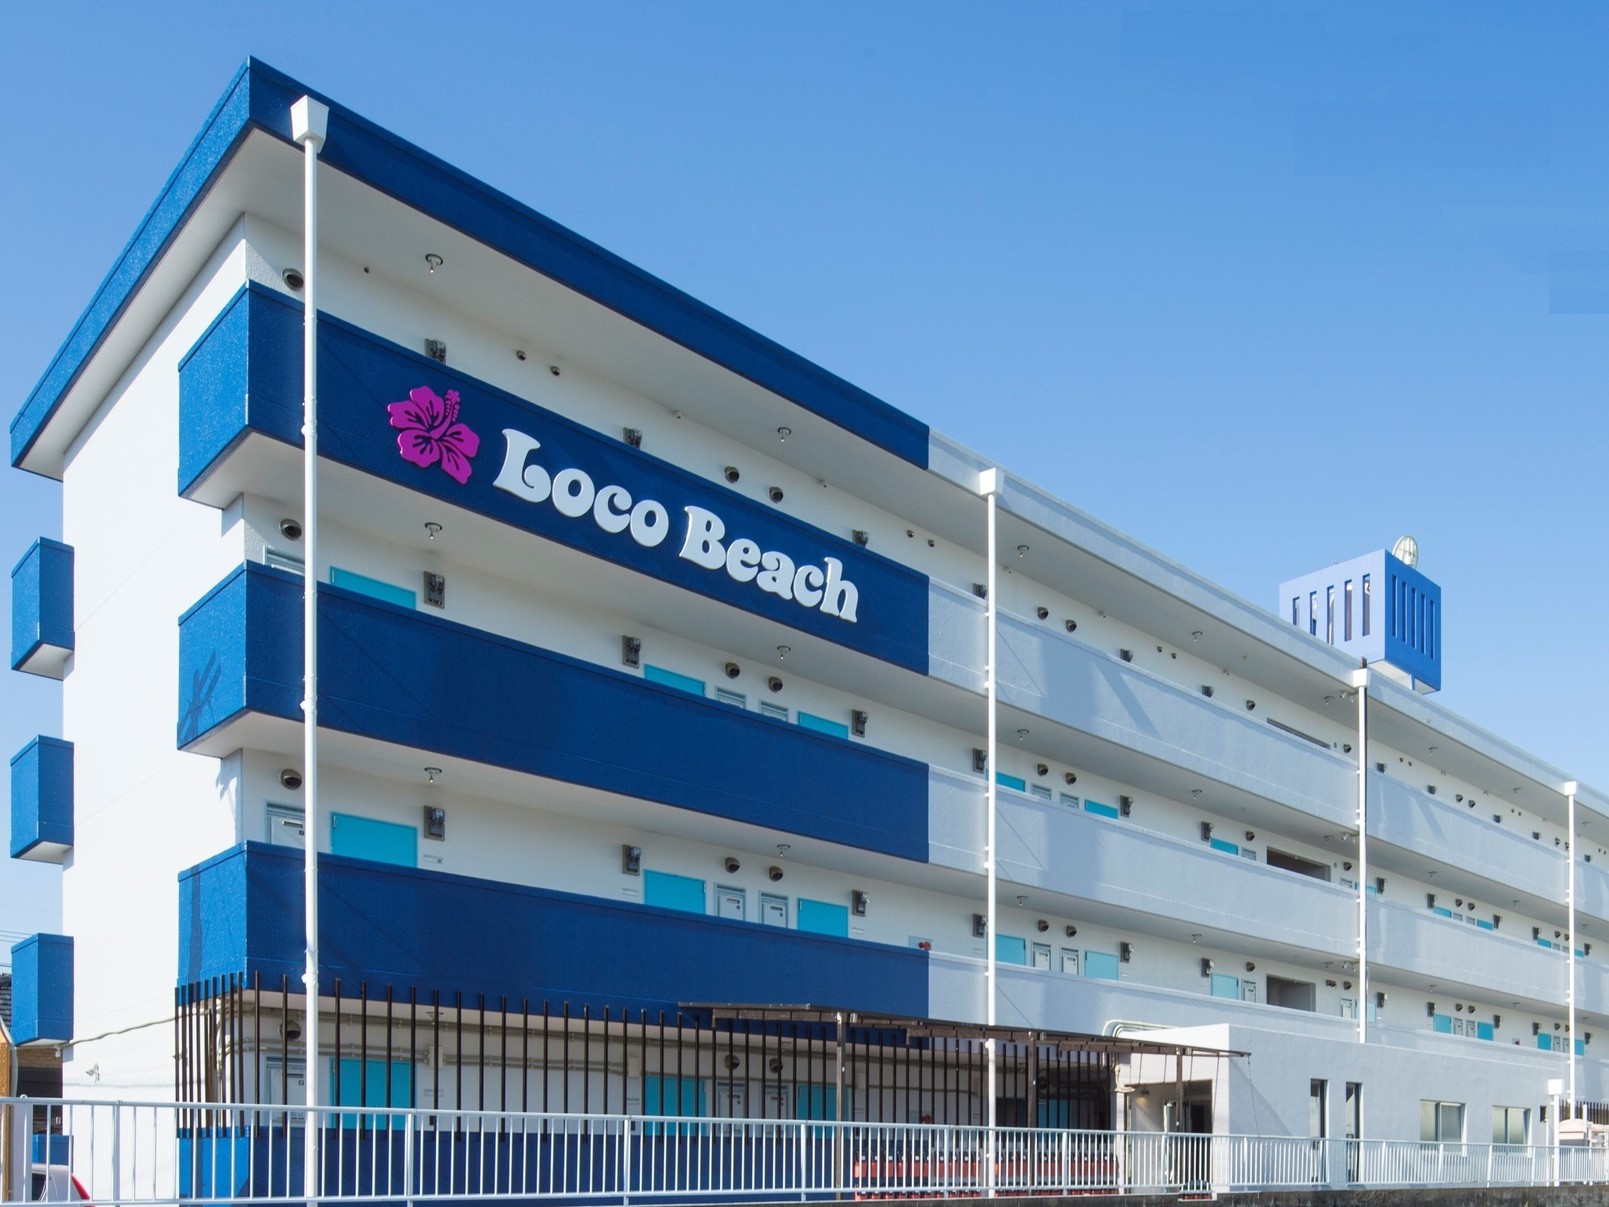 Loco Beach image